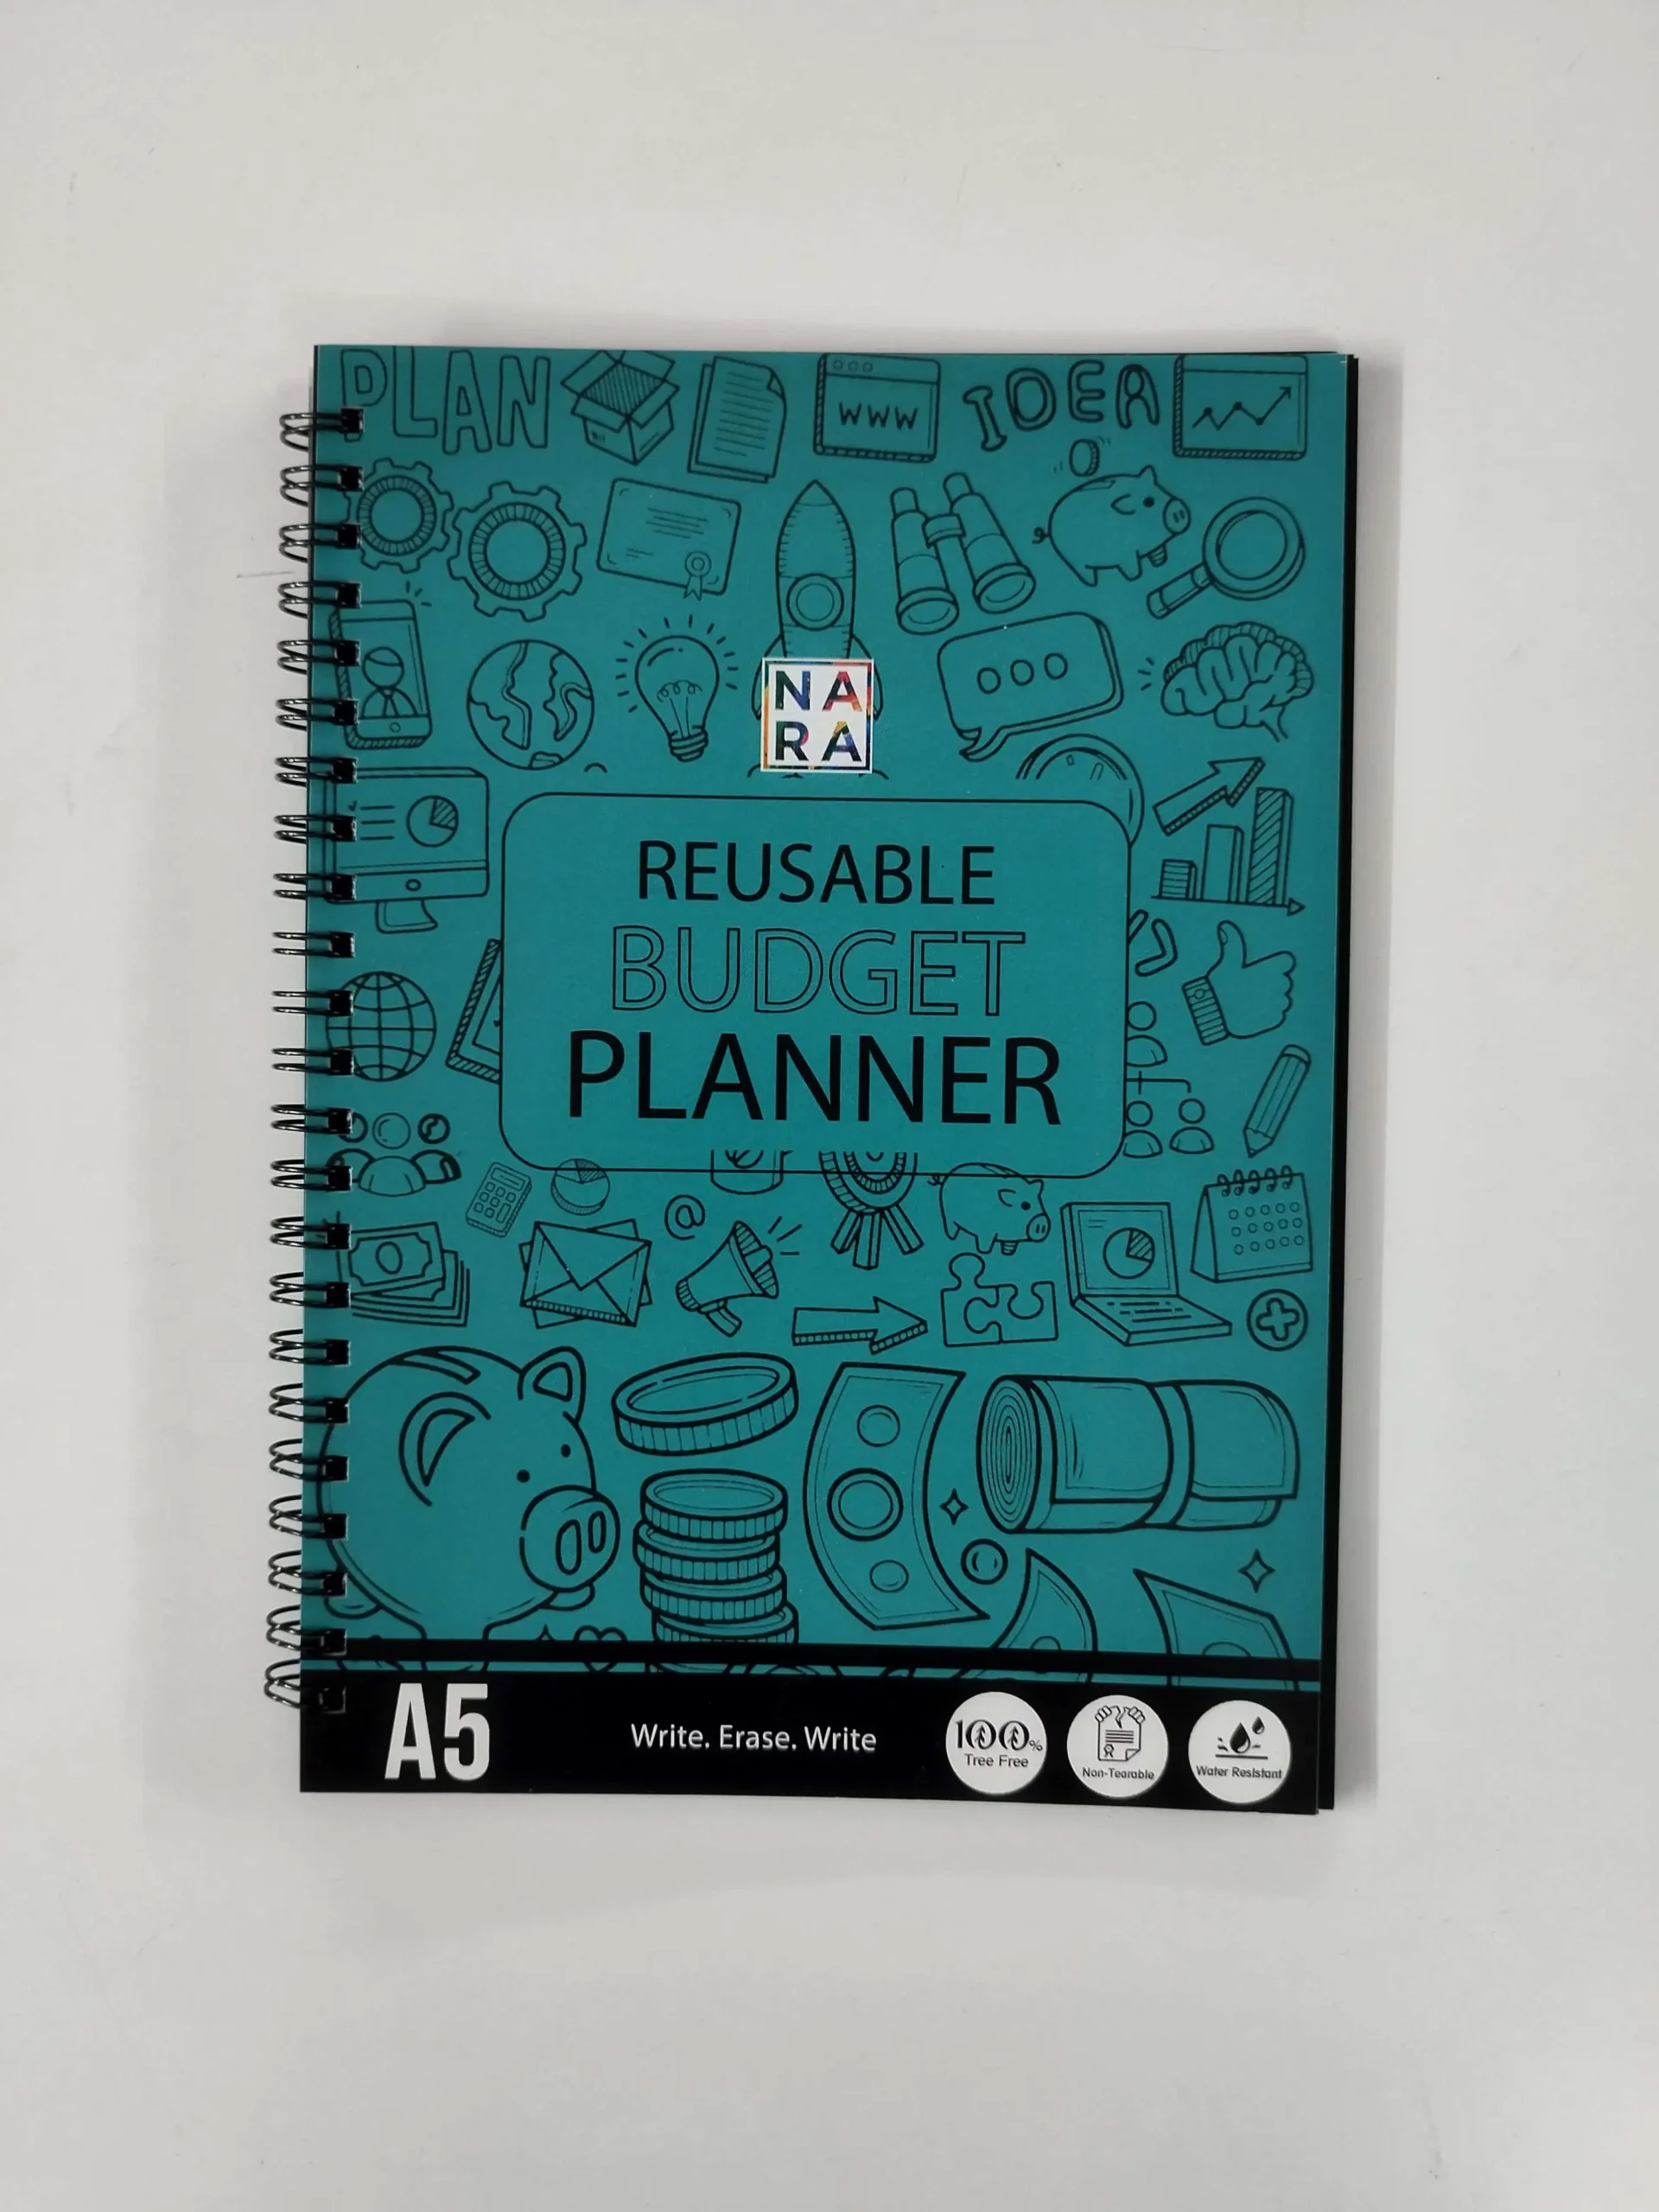 NARA Reusable Budget Planner